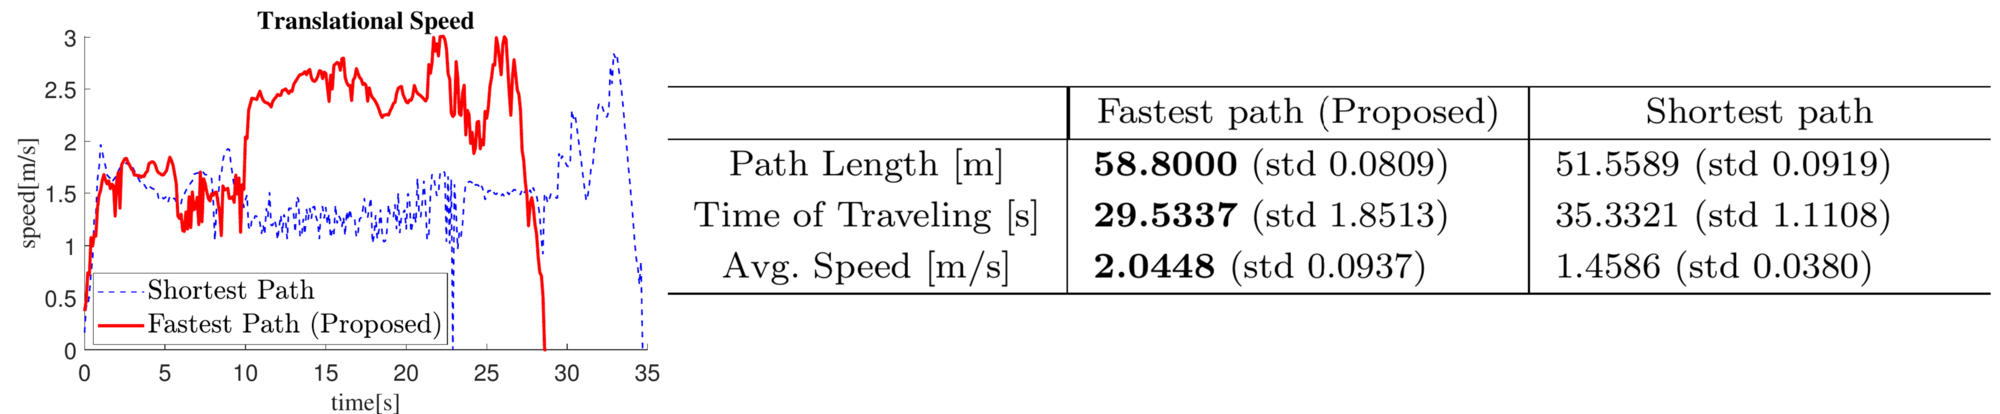 (pic) experimental speed comparison